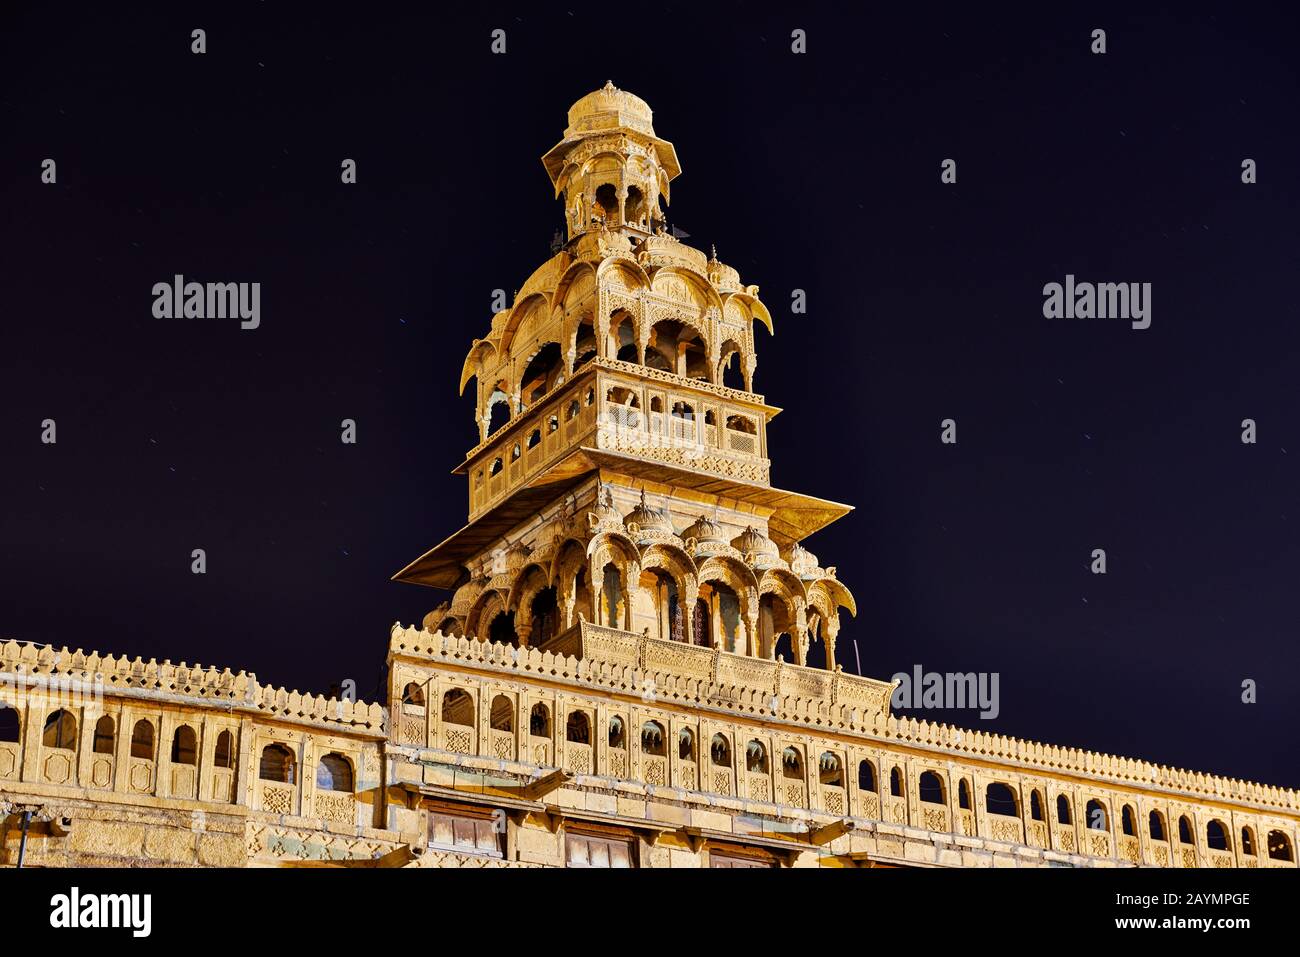 Notte girato di Mandir Palace con Tazia torre, Jaisalmer, Rajasthan, India Foto Stock